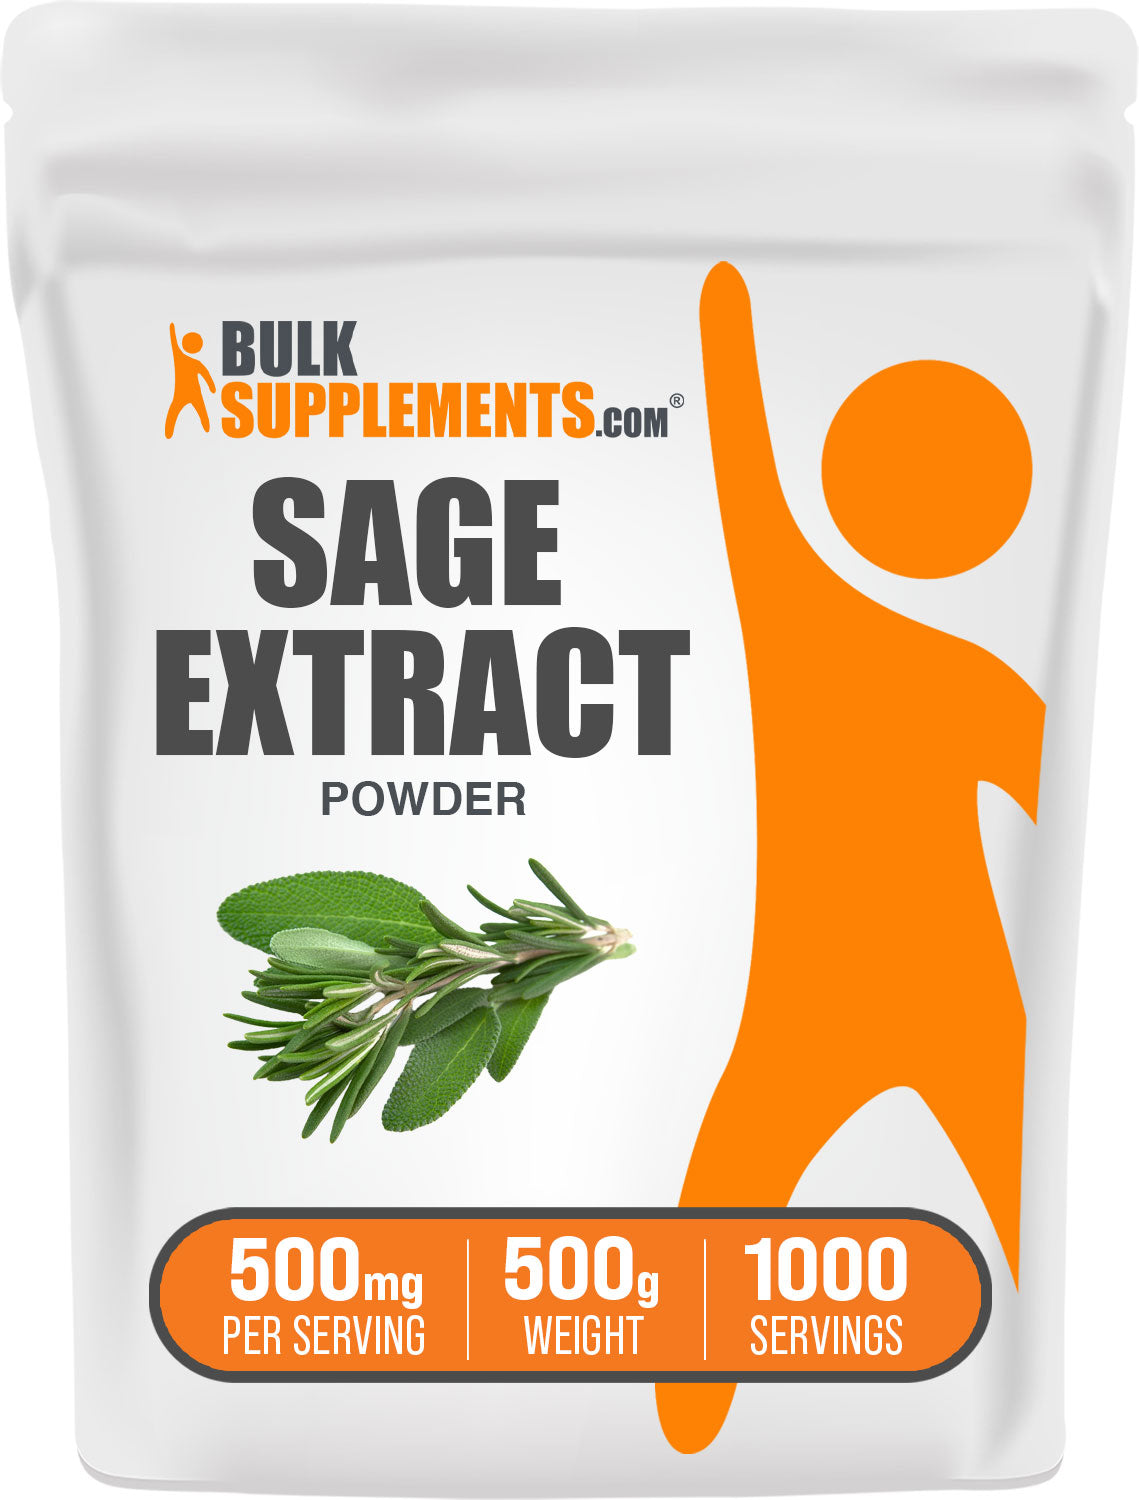 BulkSupplements.com Sage Extract Powder 500g bag